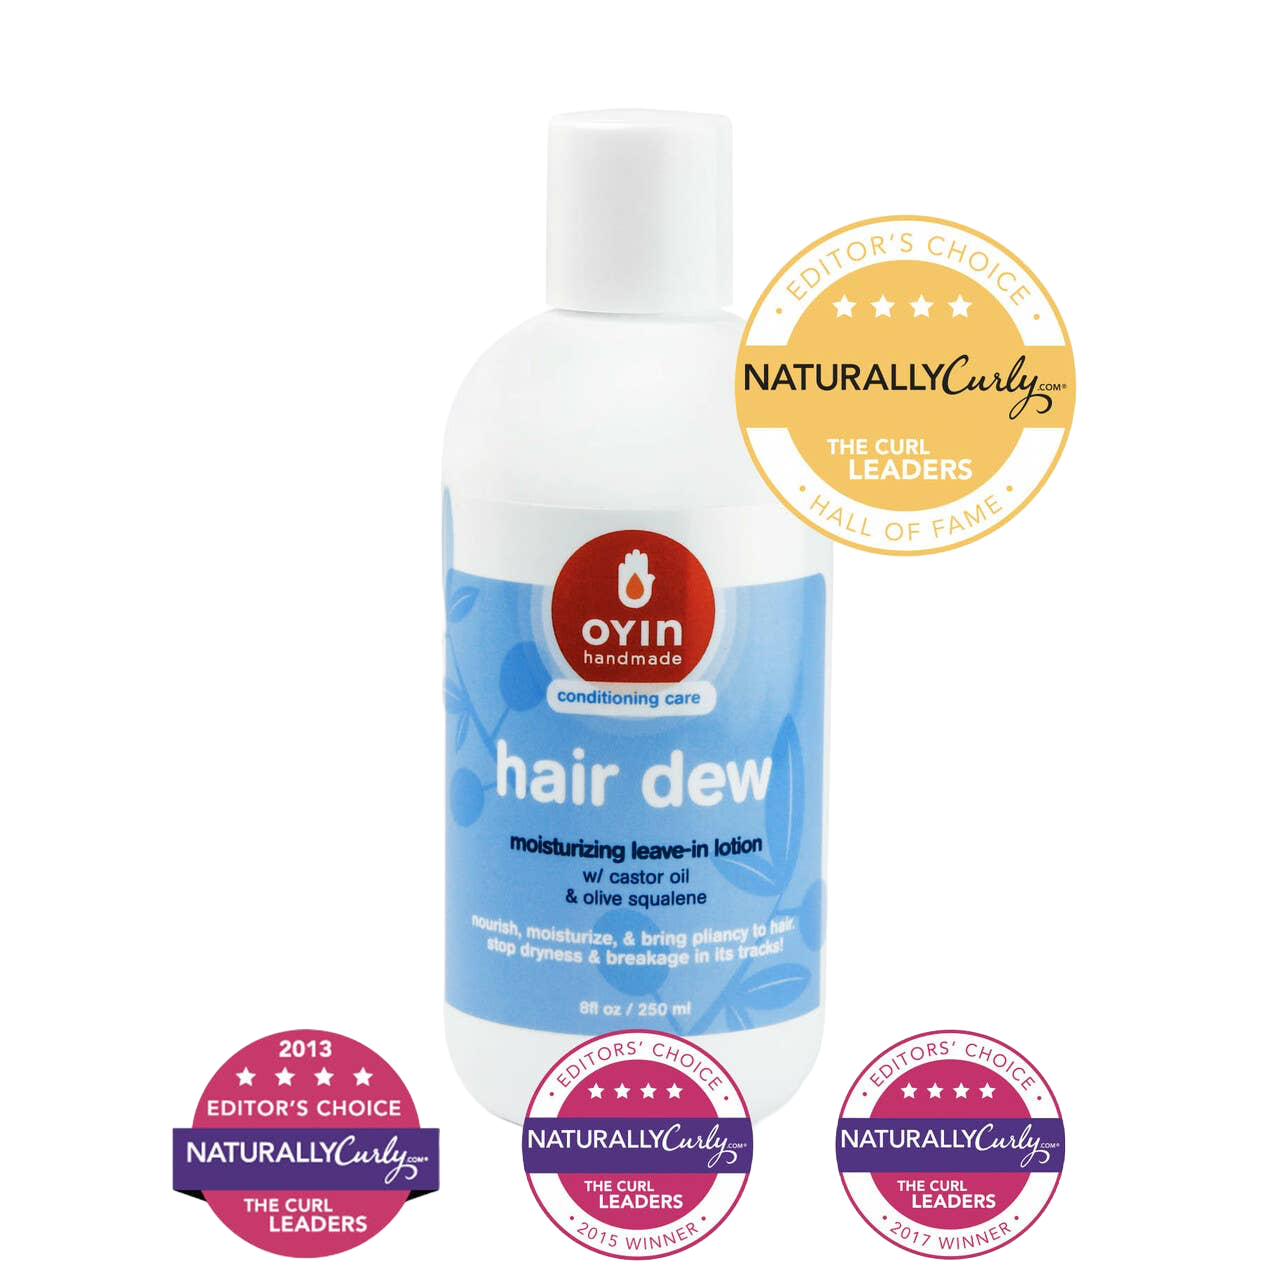 Oyin Handmade Hair Dew Moisturizing Leave-in Hair Lotion 8oz